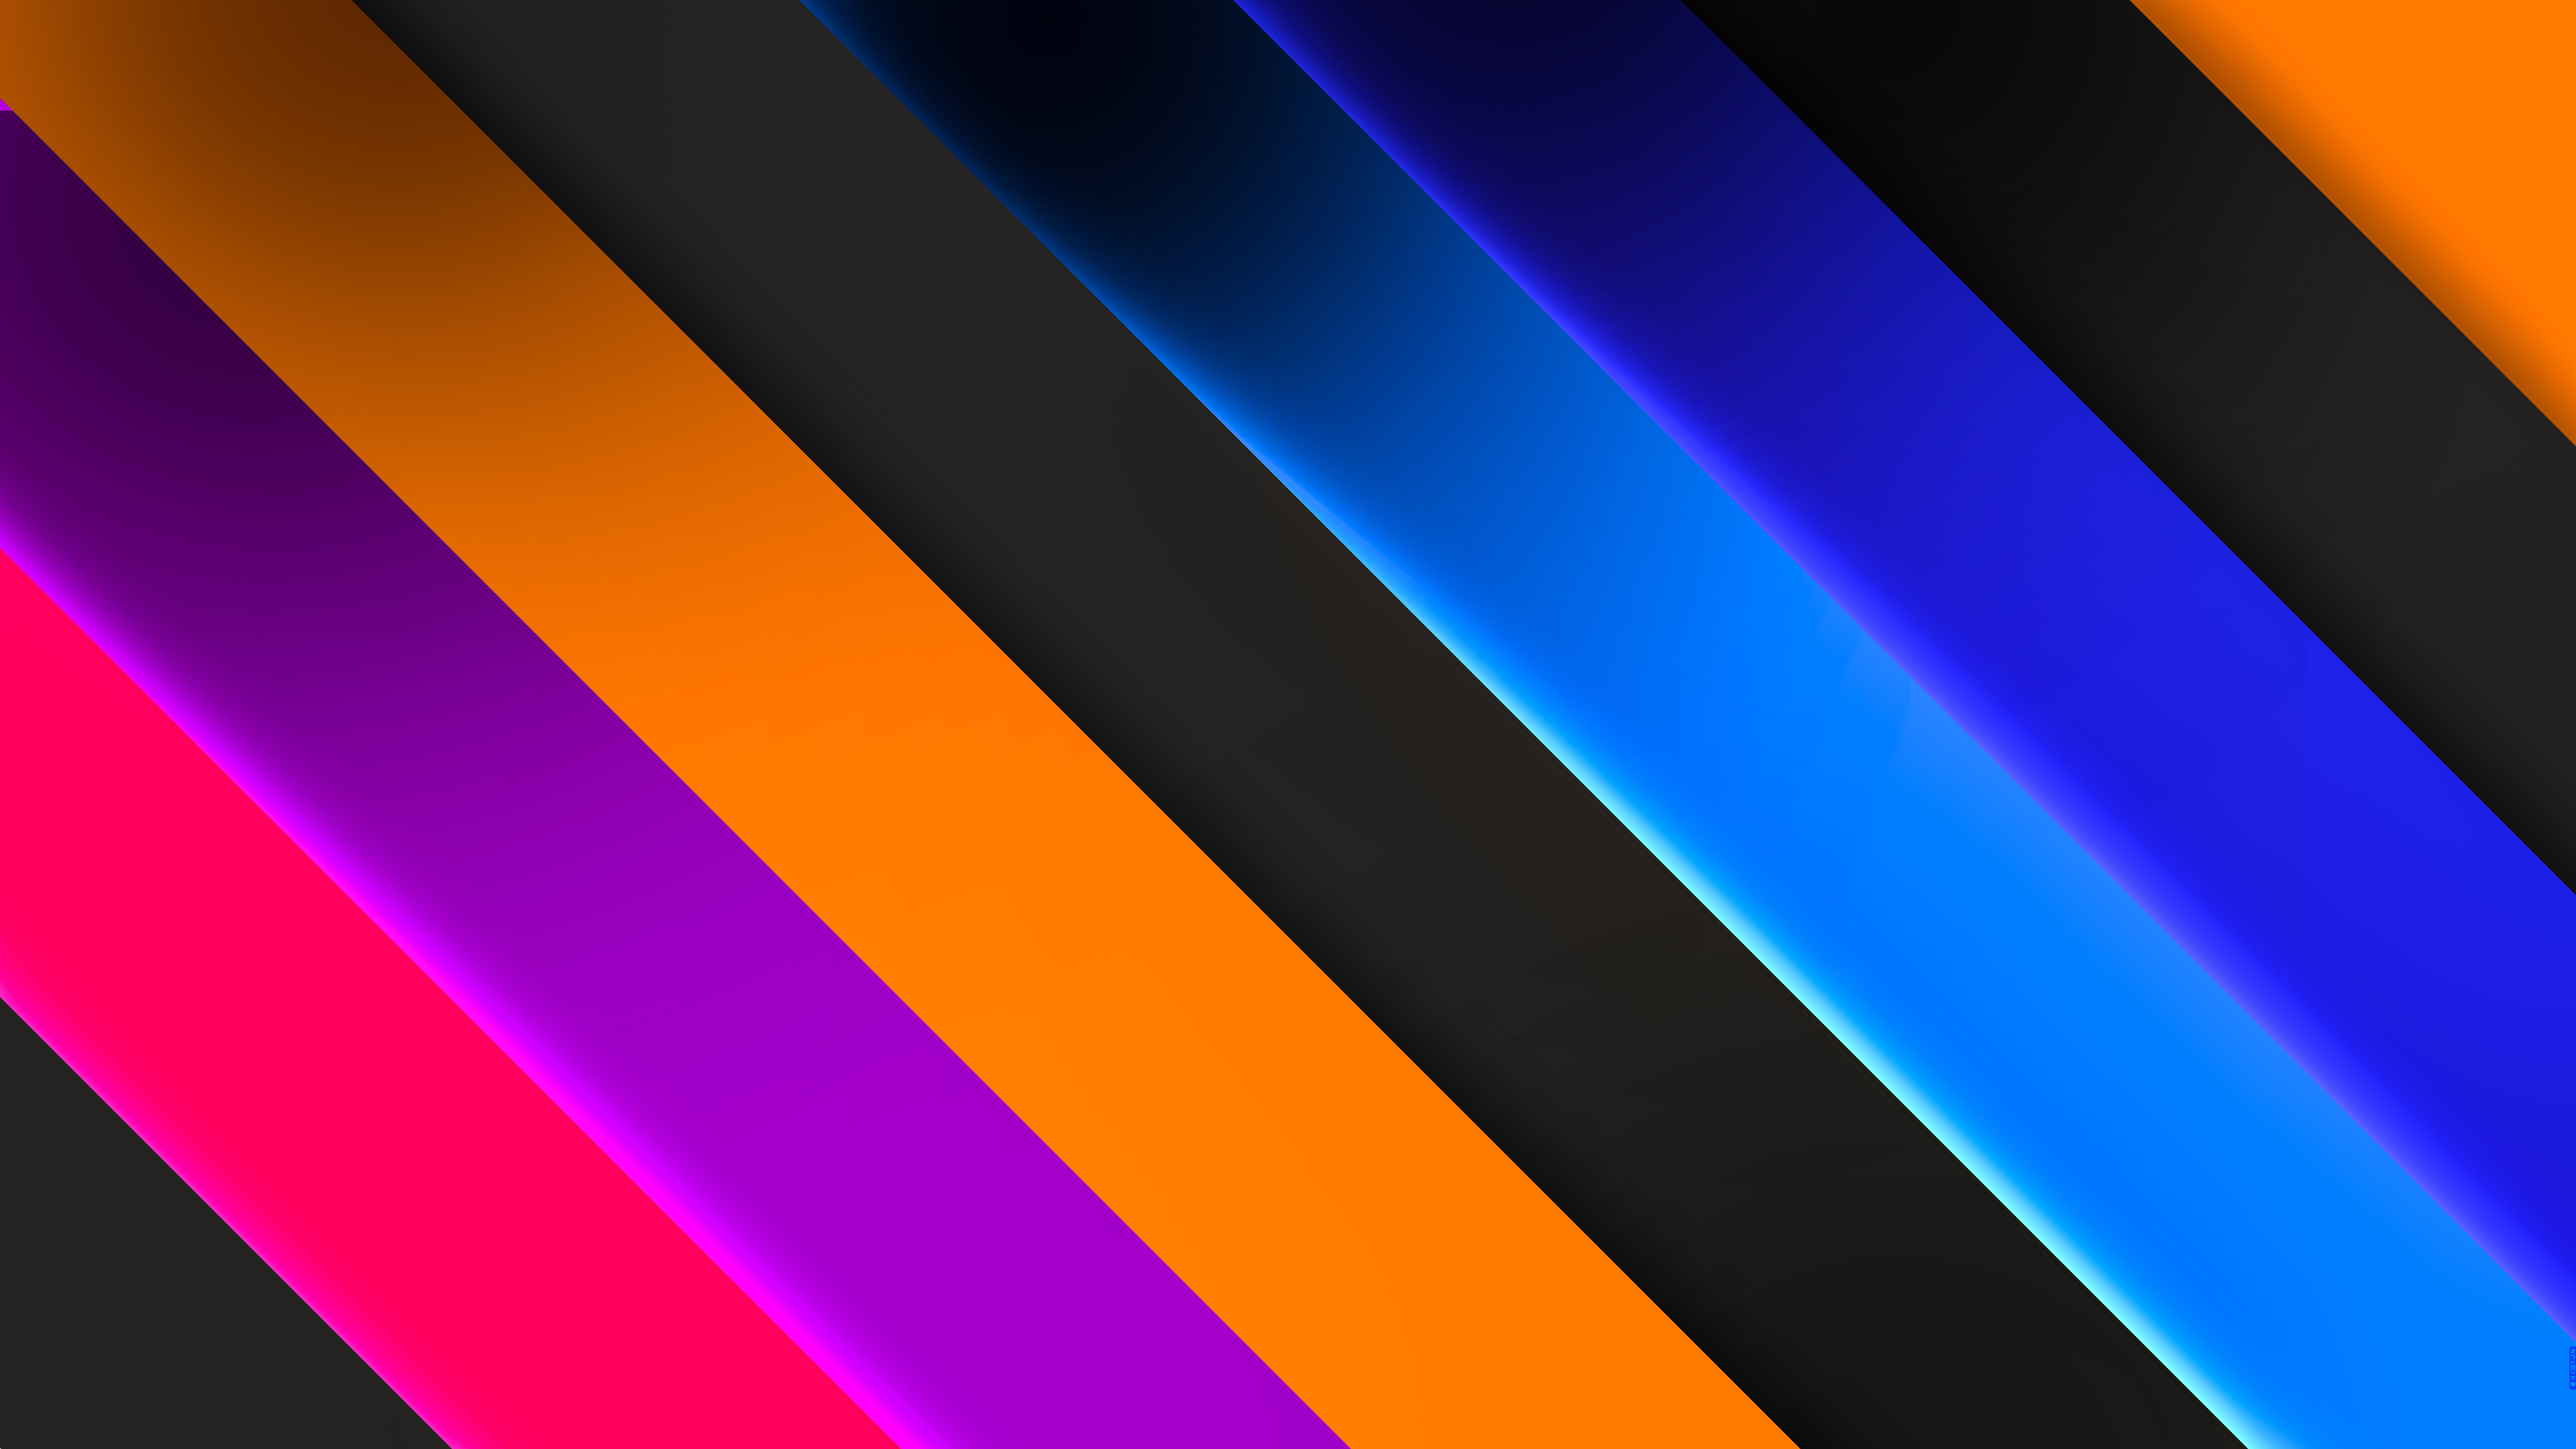 Artistic Stripes HD Wallpaper | Background Image